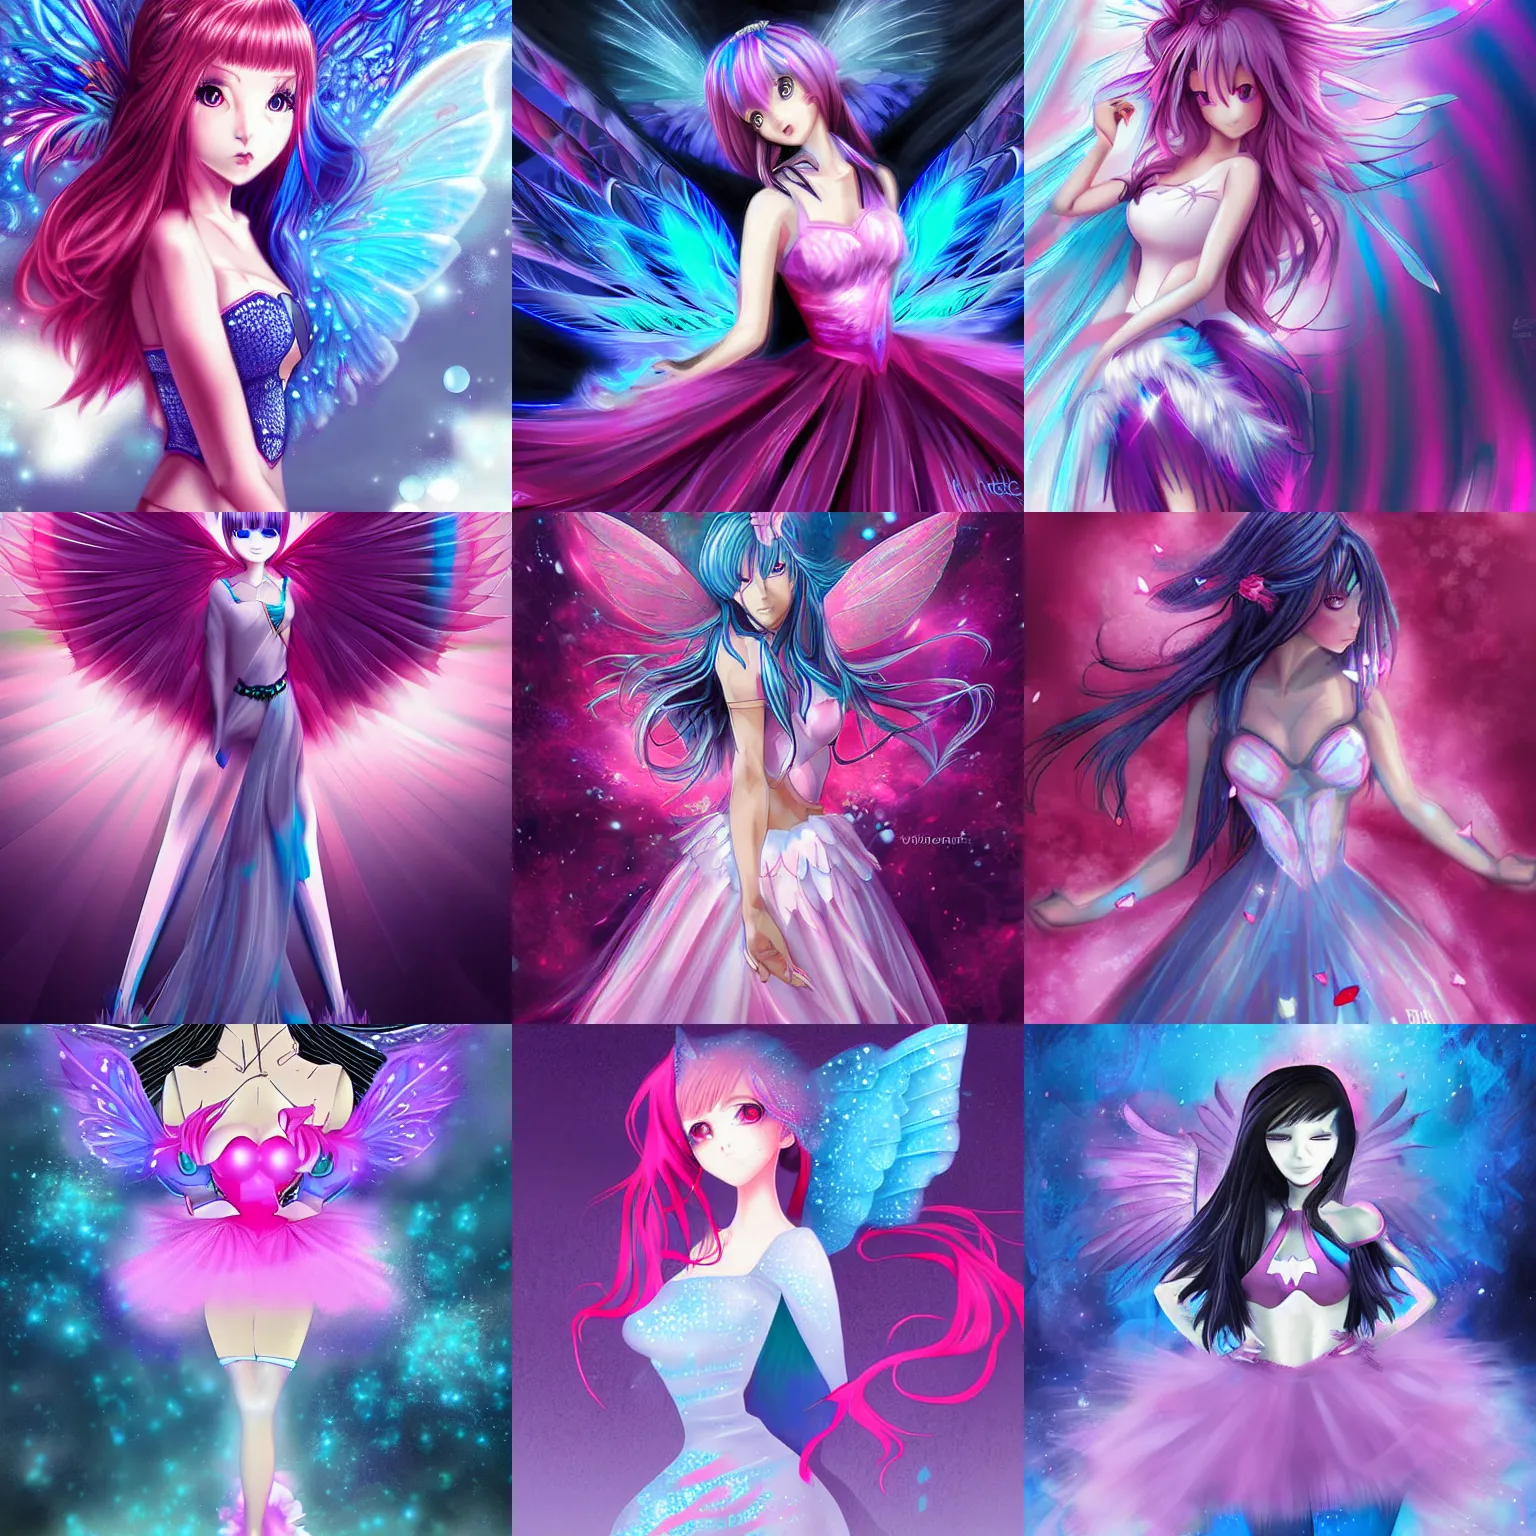 Prompt: animewoman, whitecorset, pinktutu, bluefairywings, digital art, fantasy art